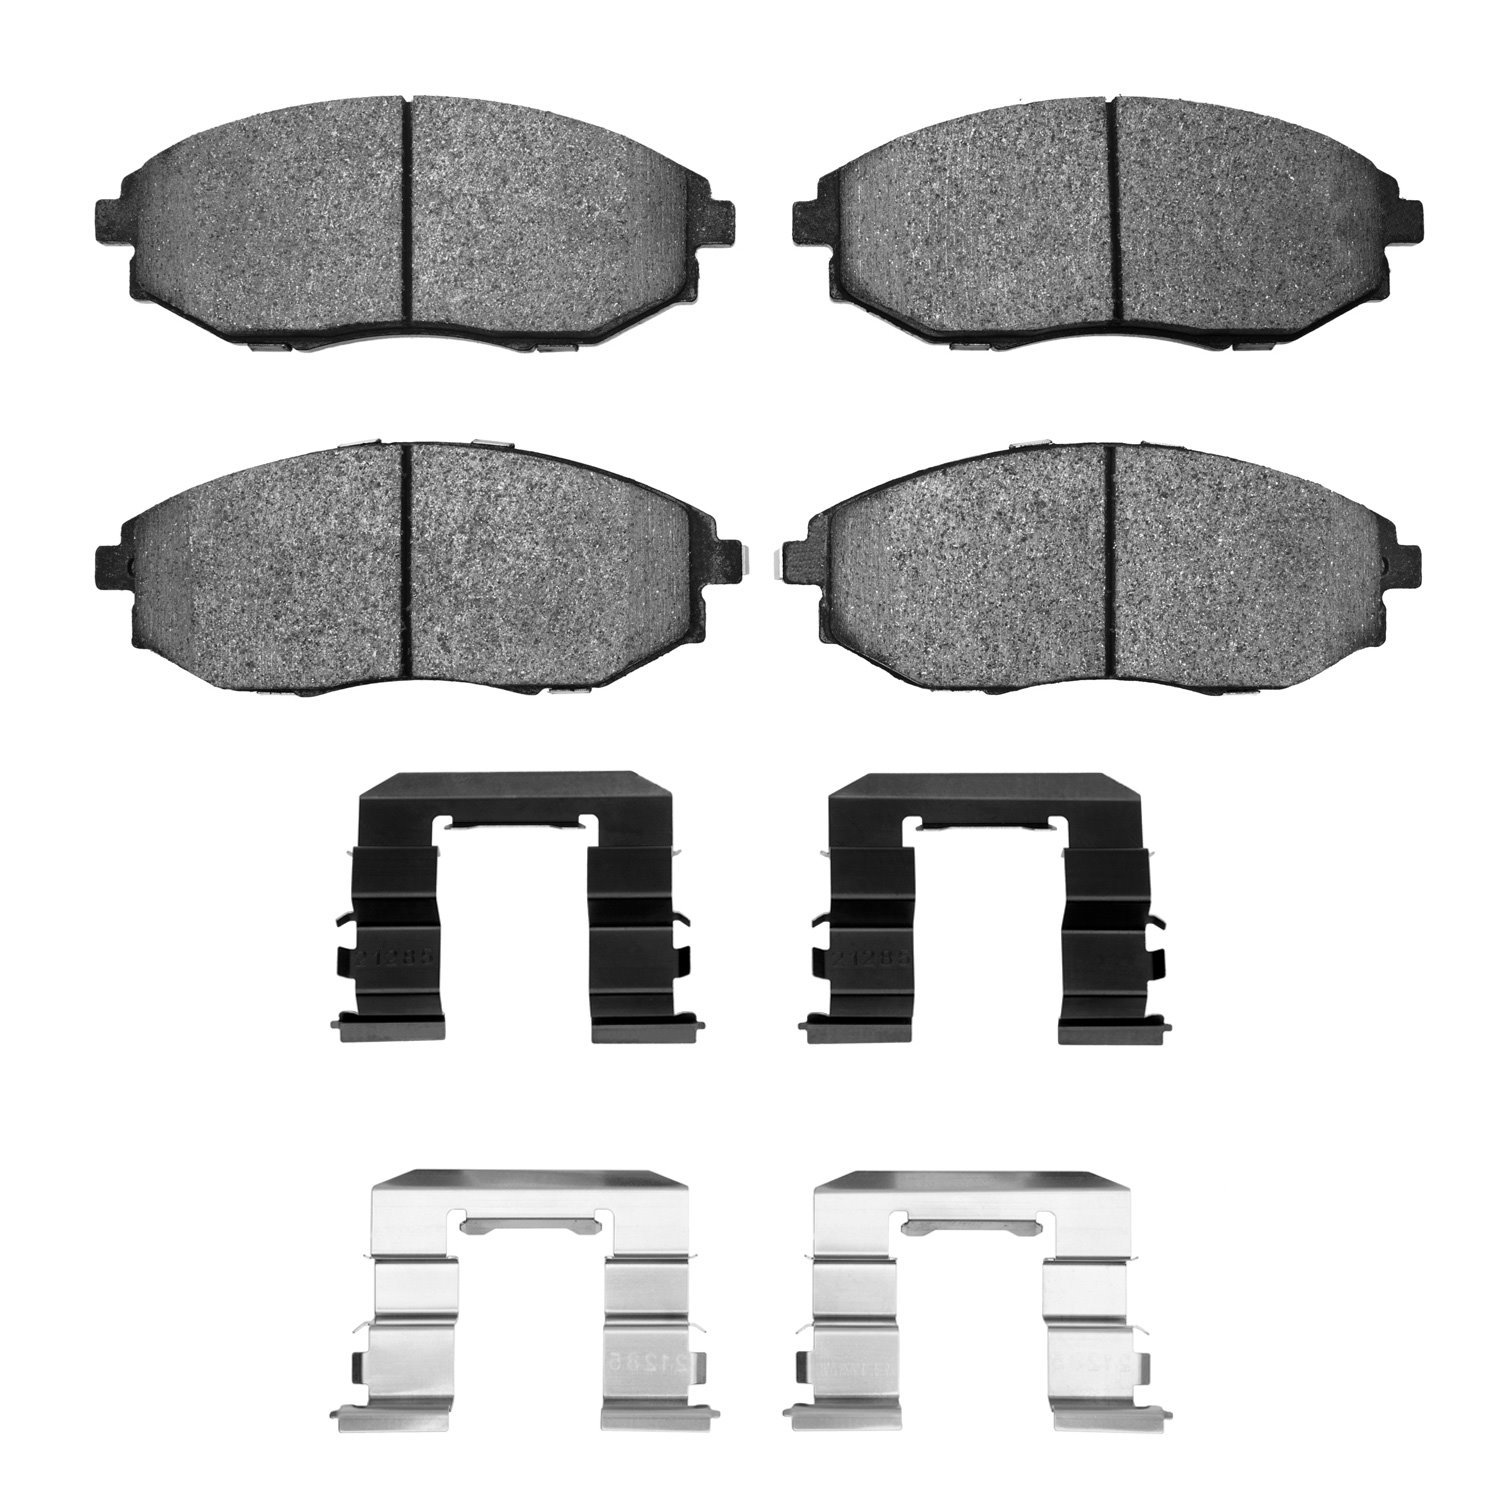 1310-1031-01 3000-Series Ceramic Brake Pads & Hardware Kit, 2004-2010 Multiple Makes/Models, Position: Front